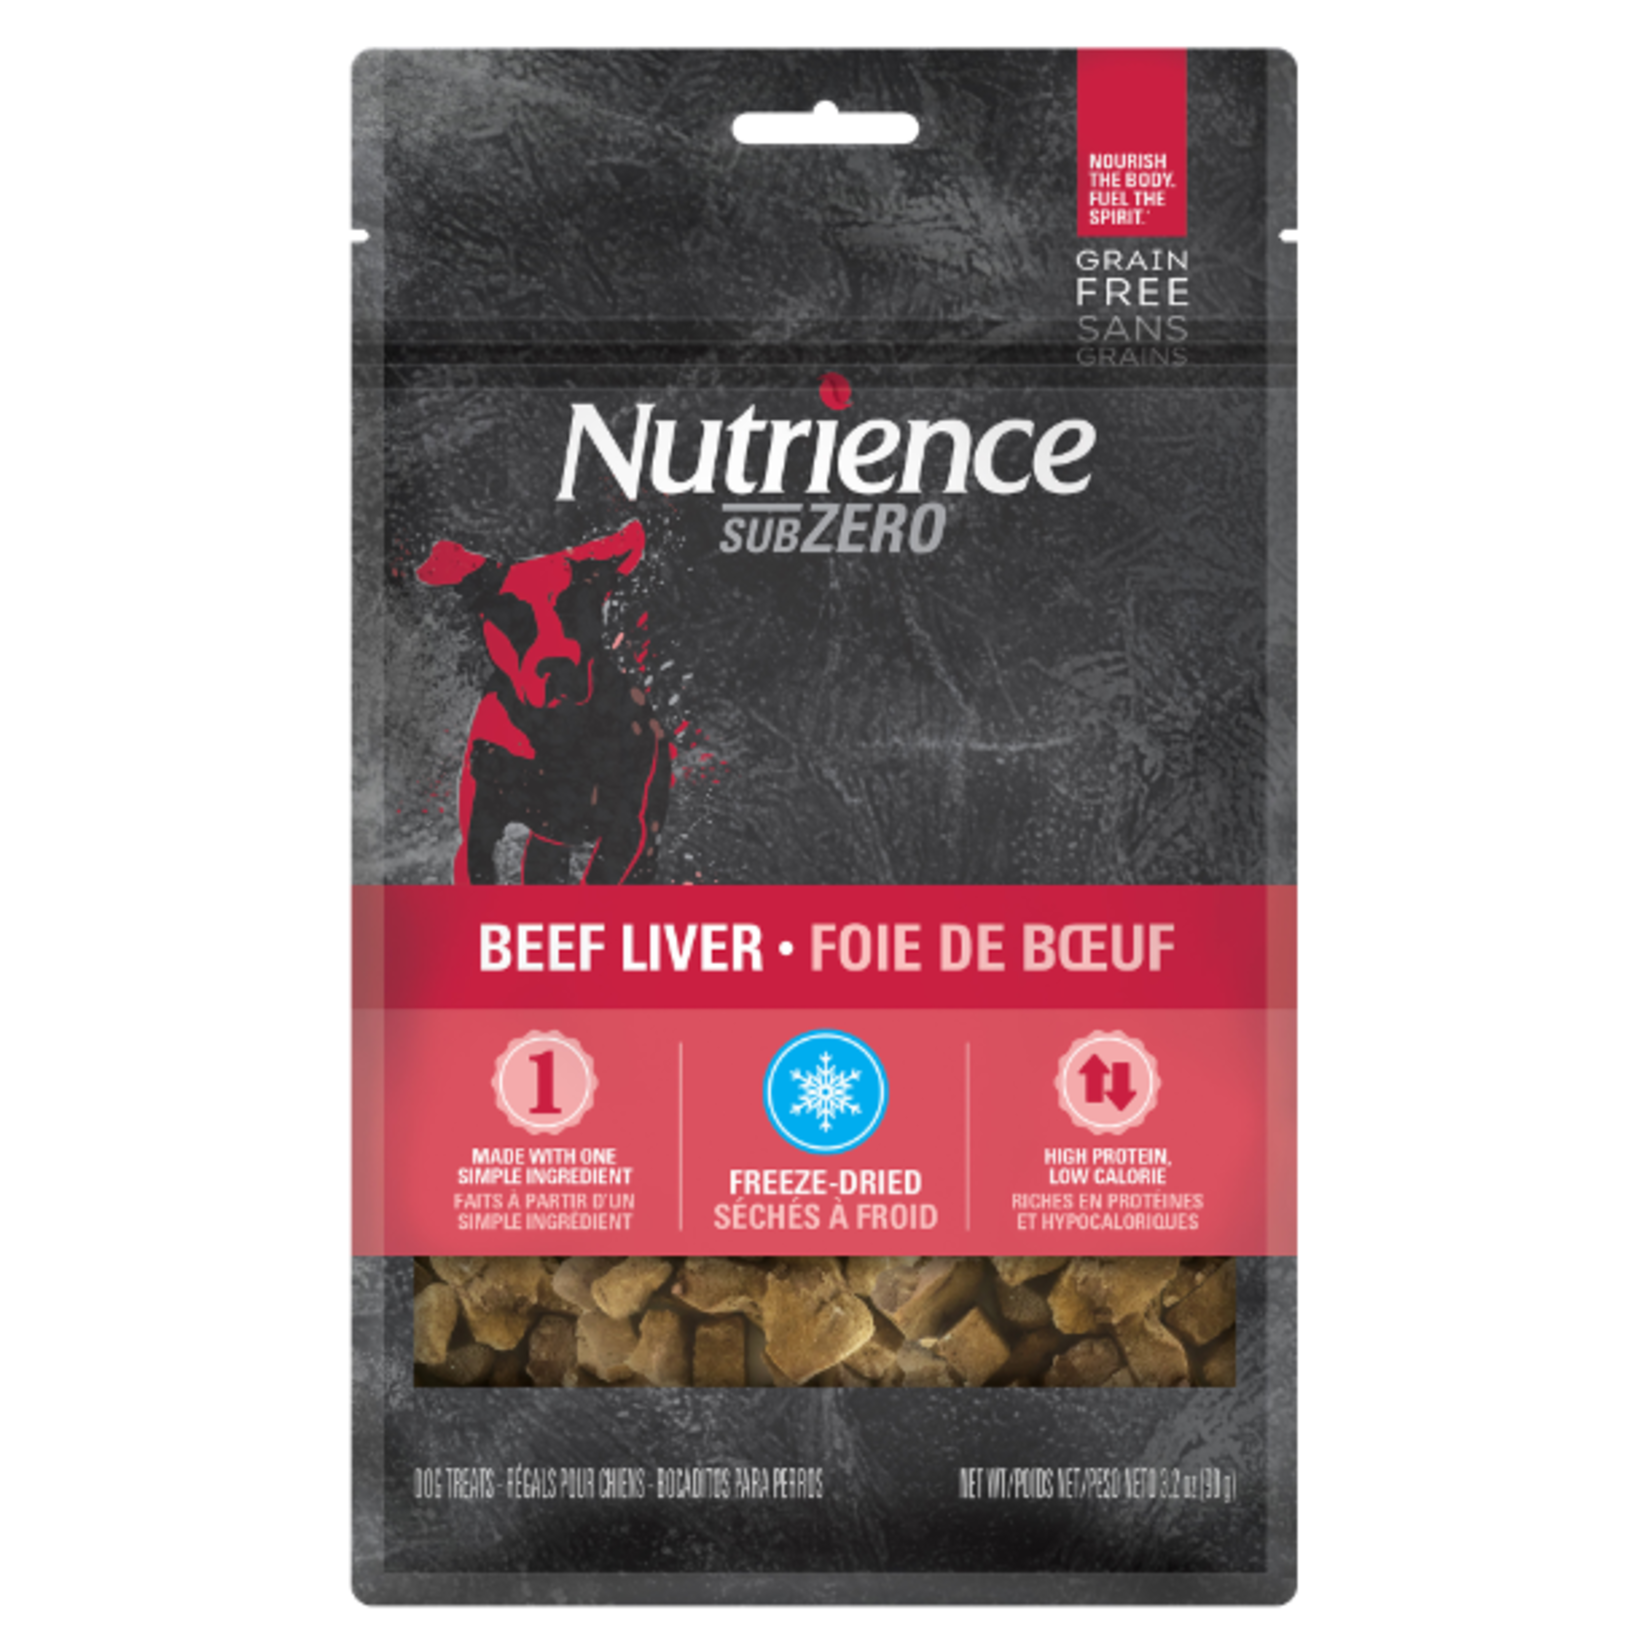 Nutrience Subzero - Freeze Dried - Single Protein Treats - Beef Liver - G Freed - 90 g